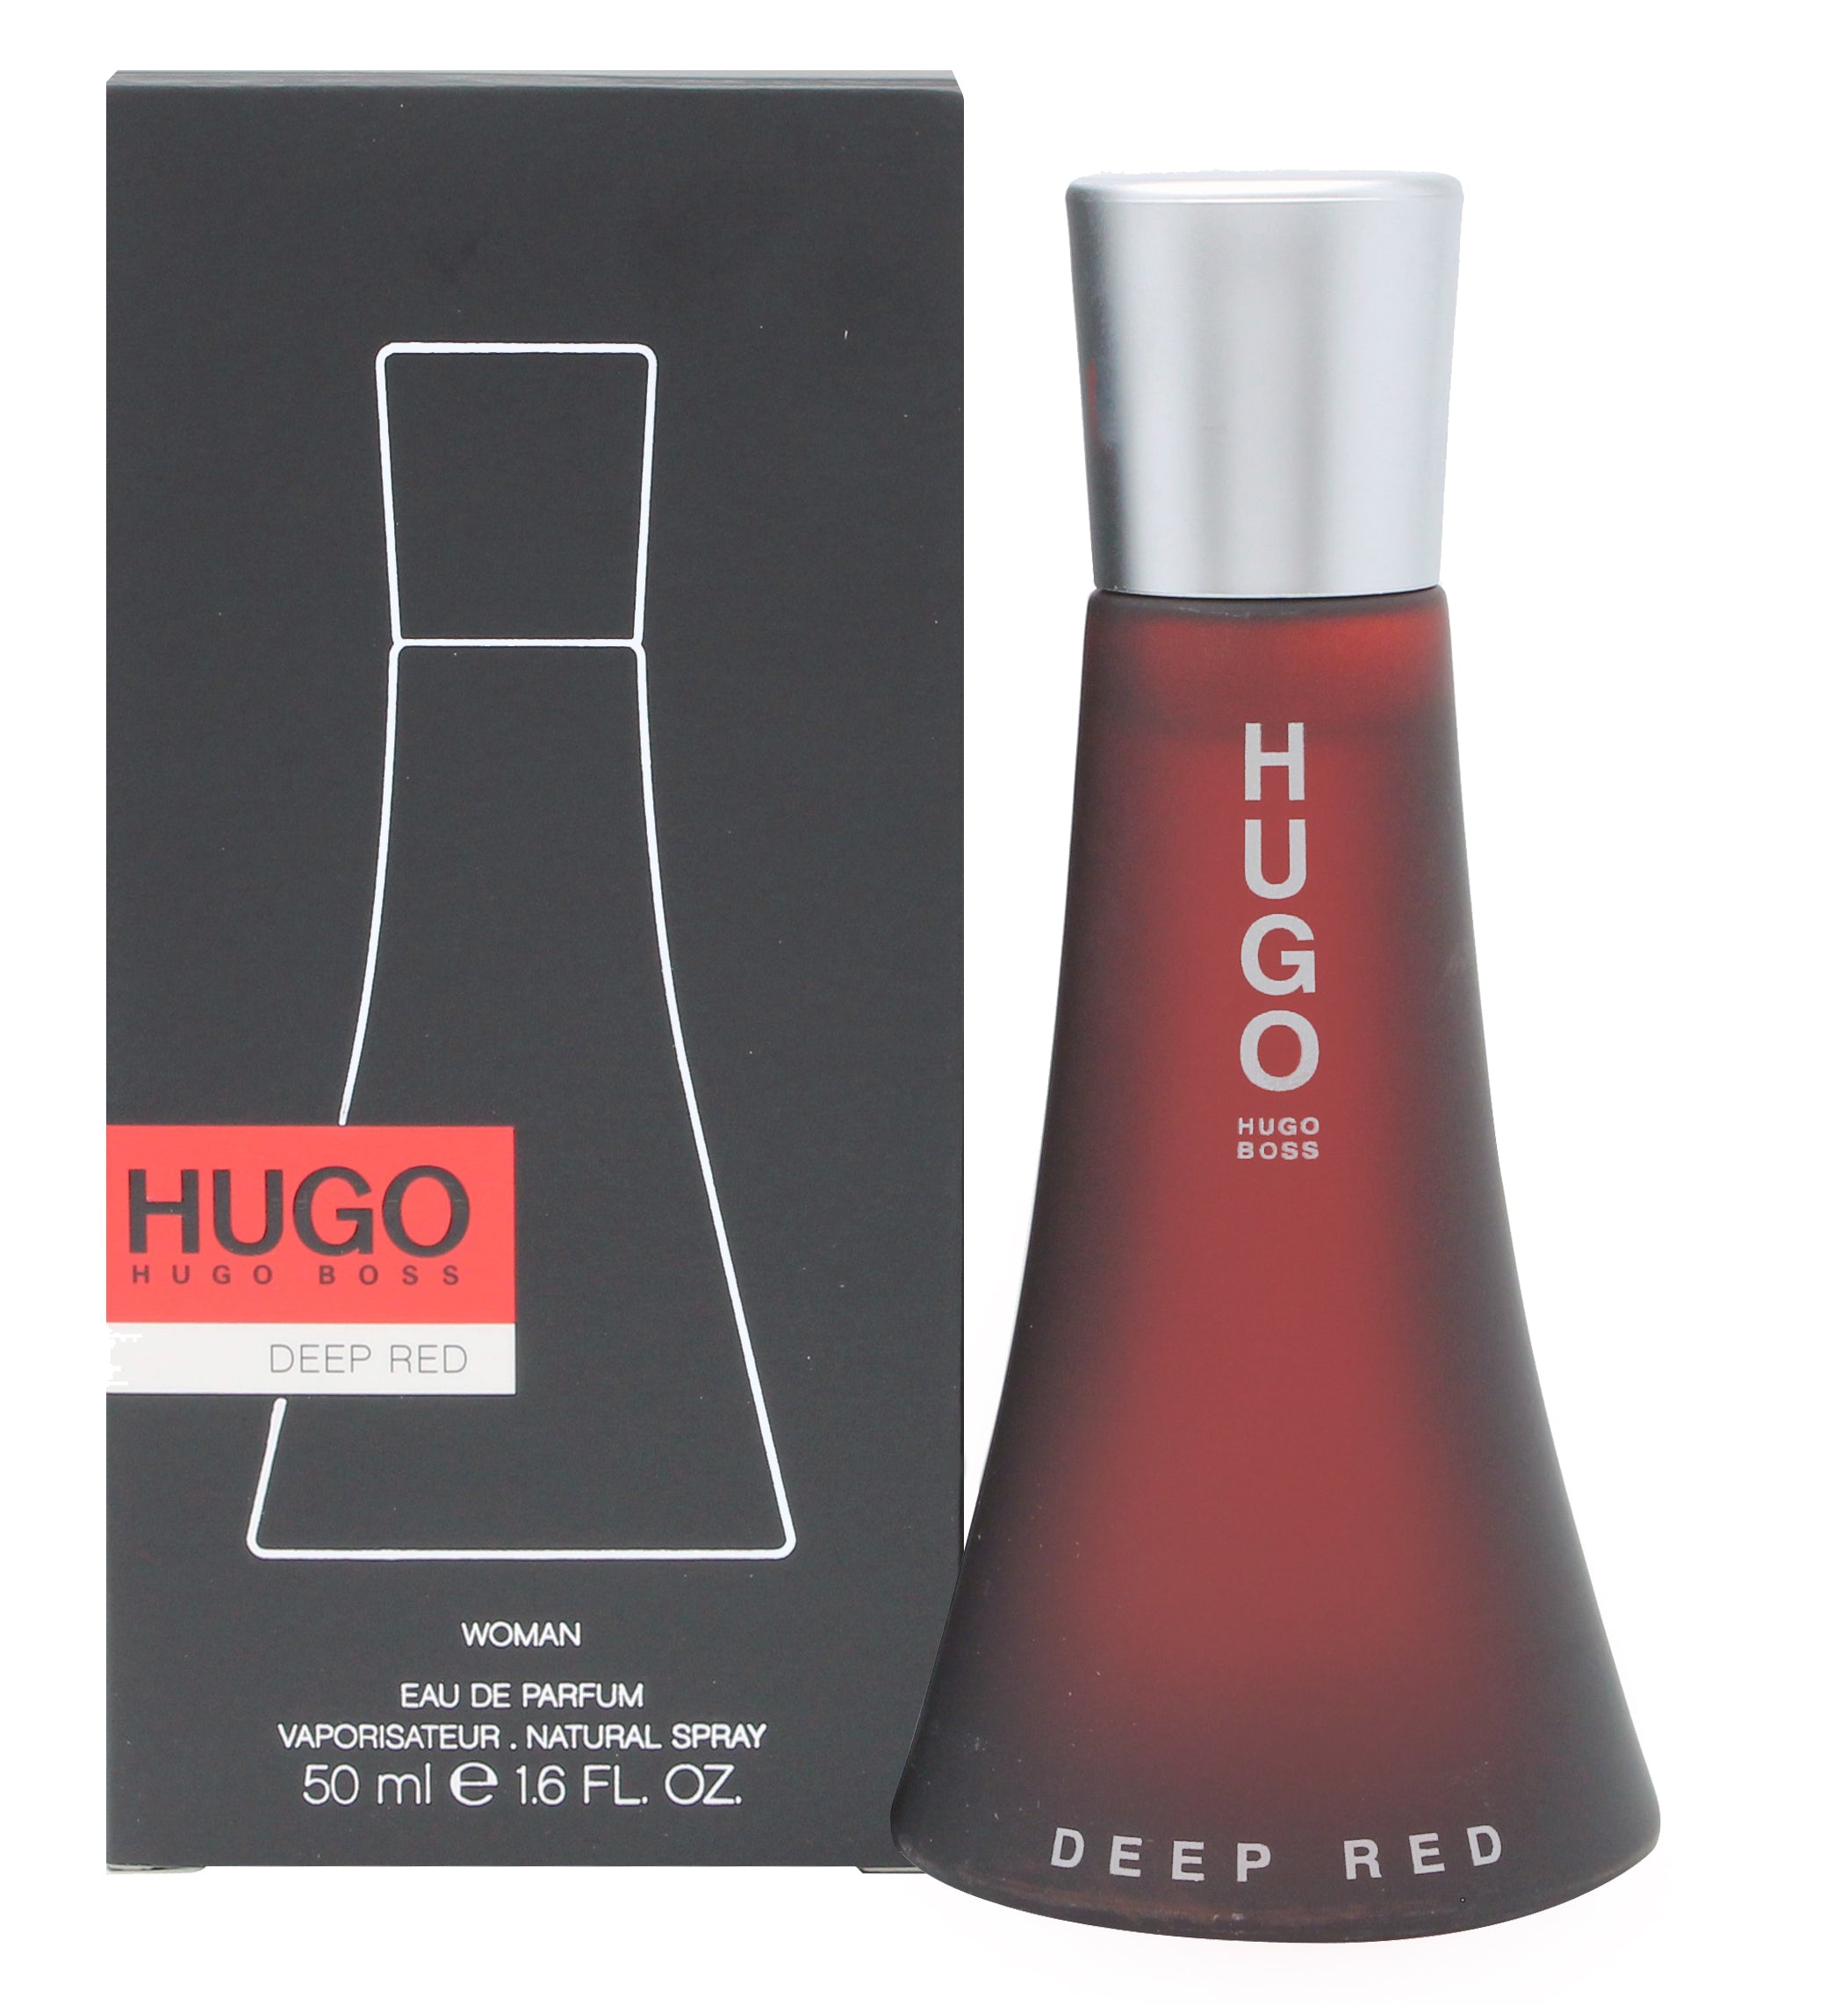 View Hugo Boss Deep Red Eau de Parfum 50ml Spray information